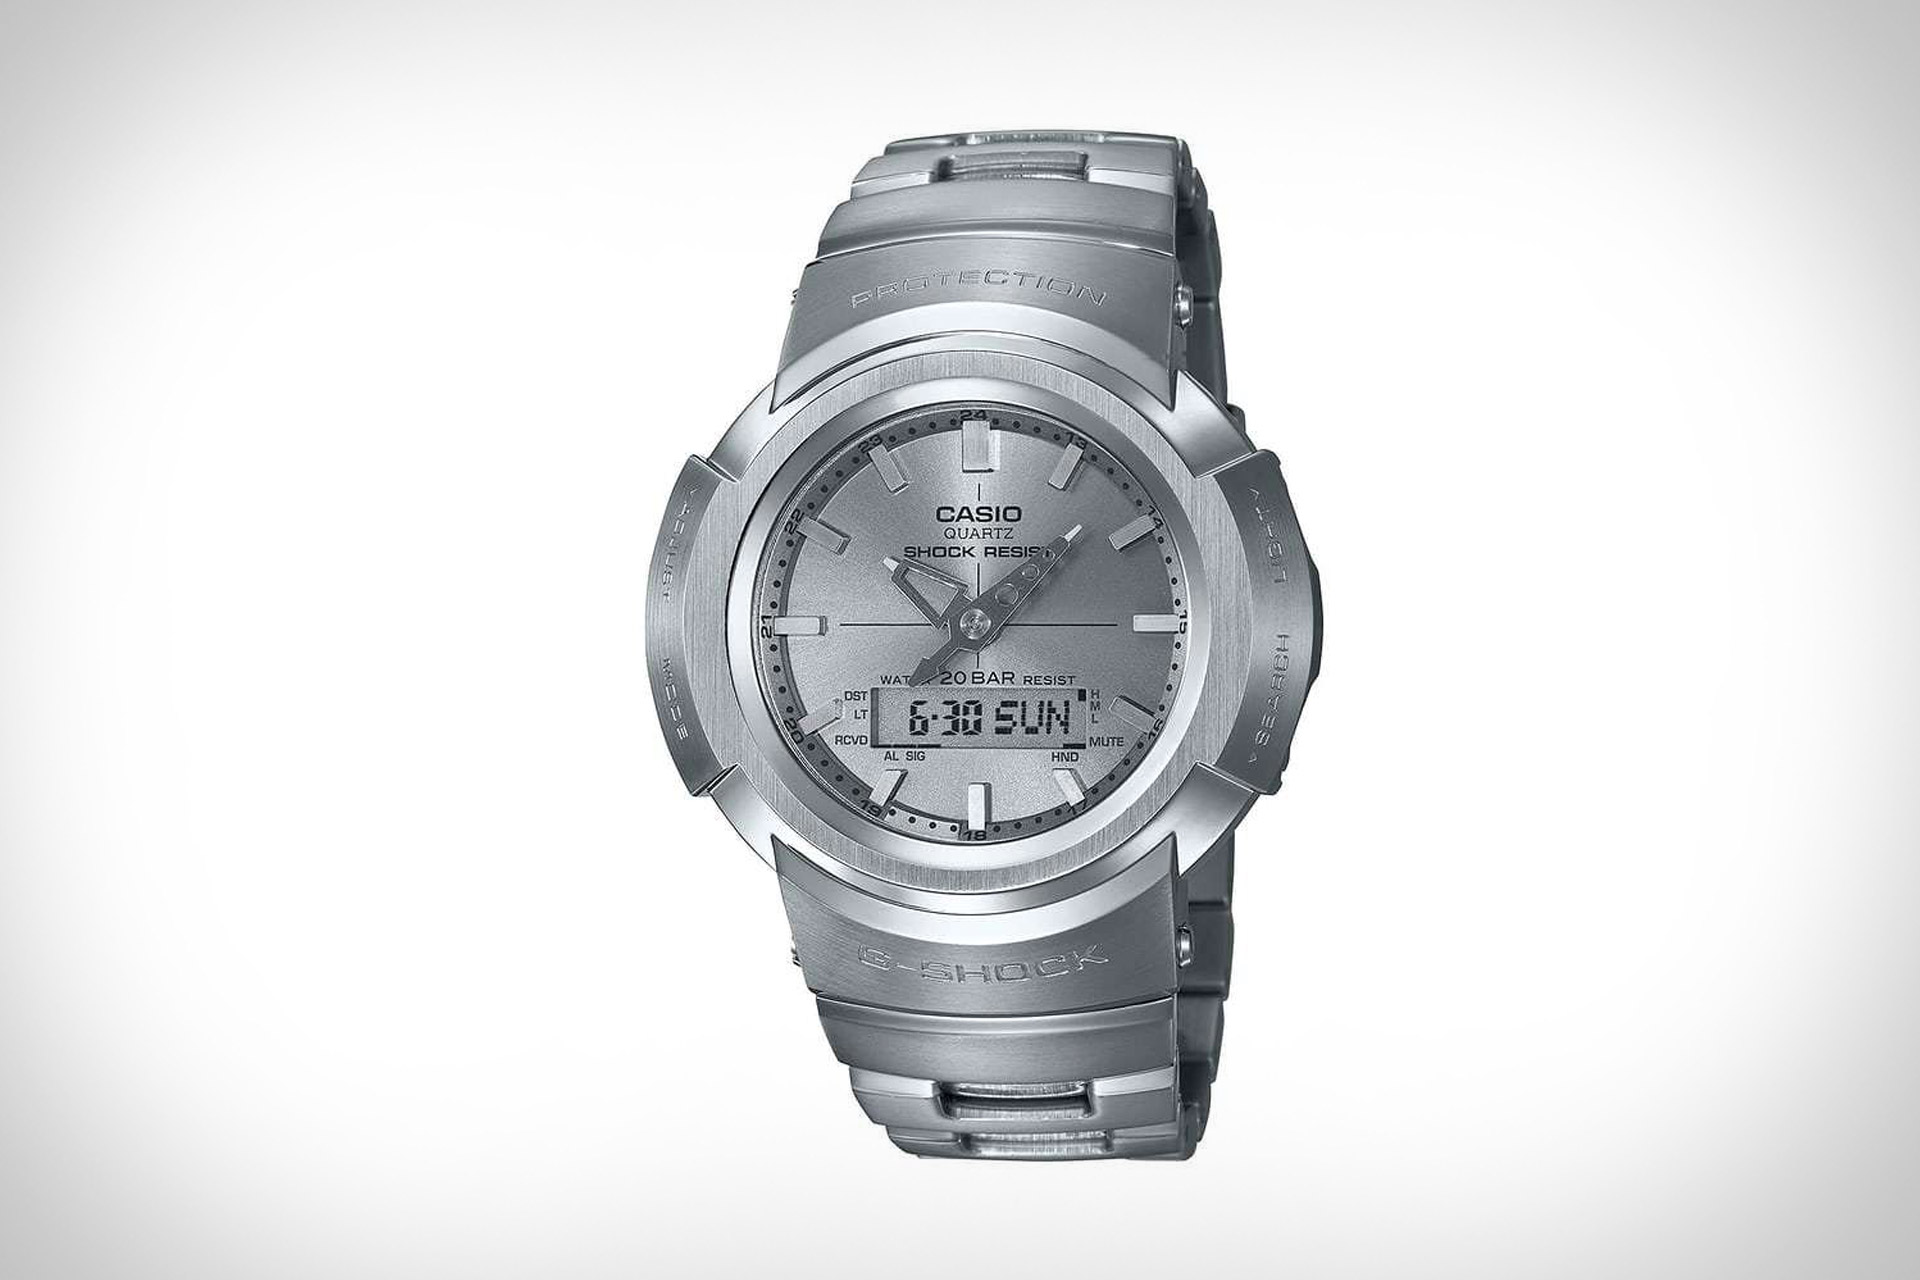 Casio G Shock Aw 500e Watch Uncrate